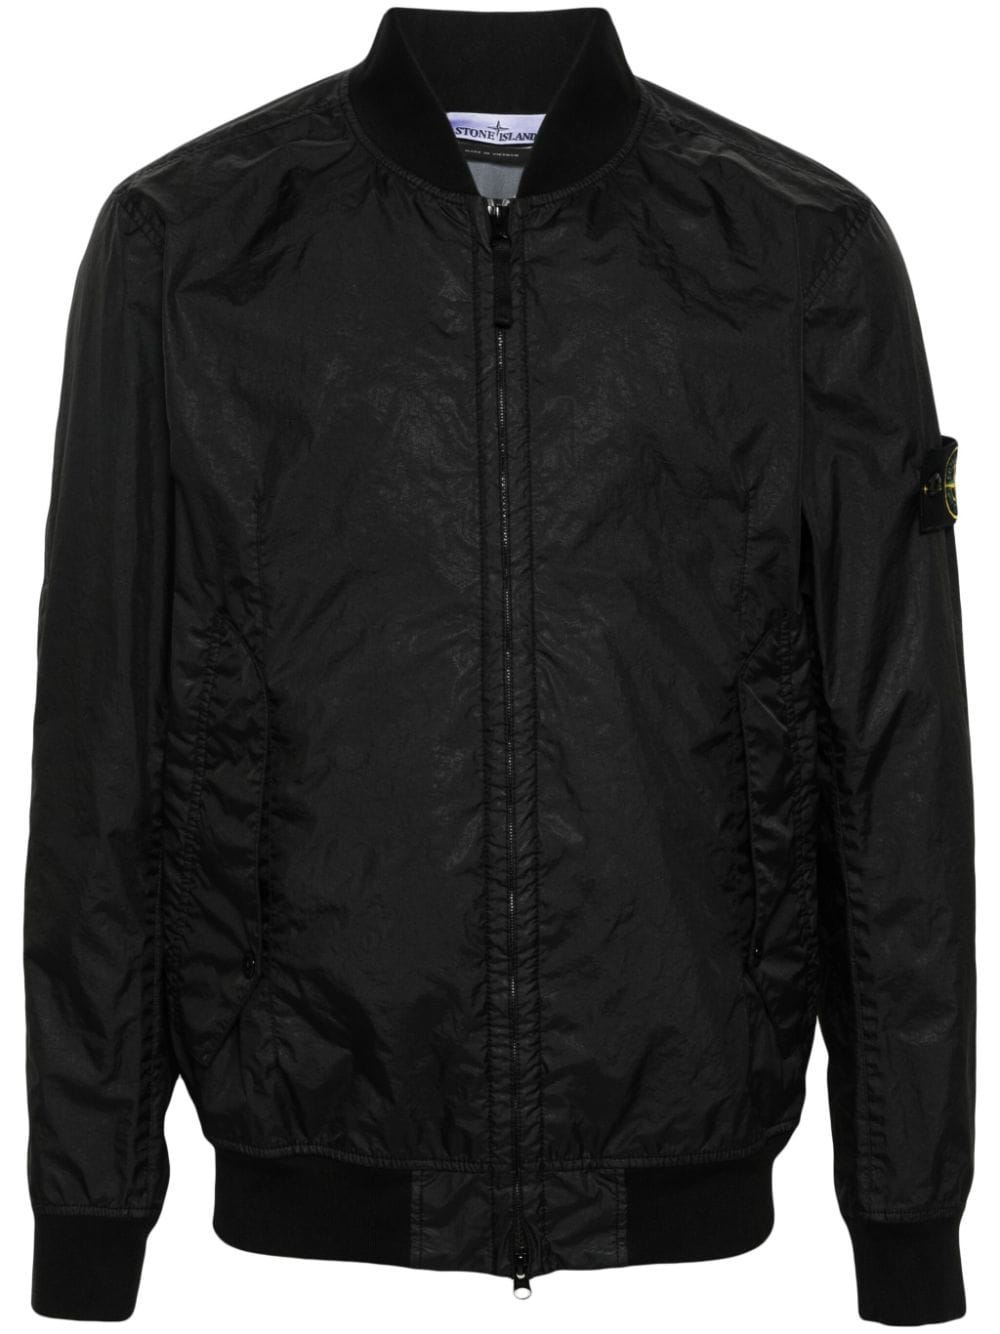 Crinkled Bomber Jacket for Men in Black